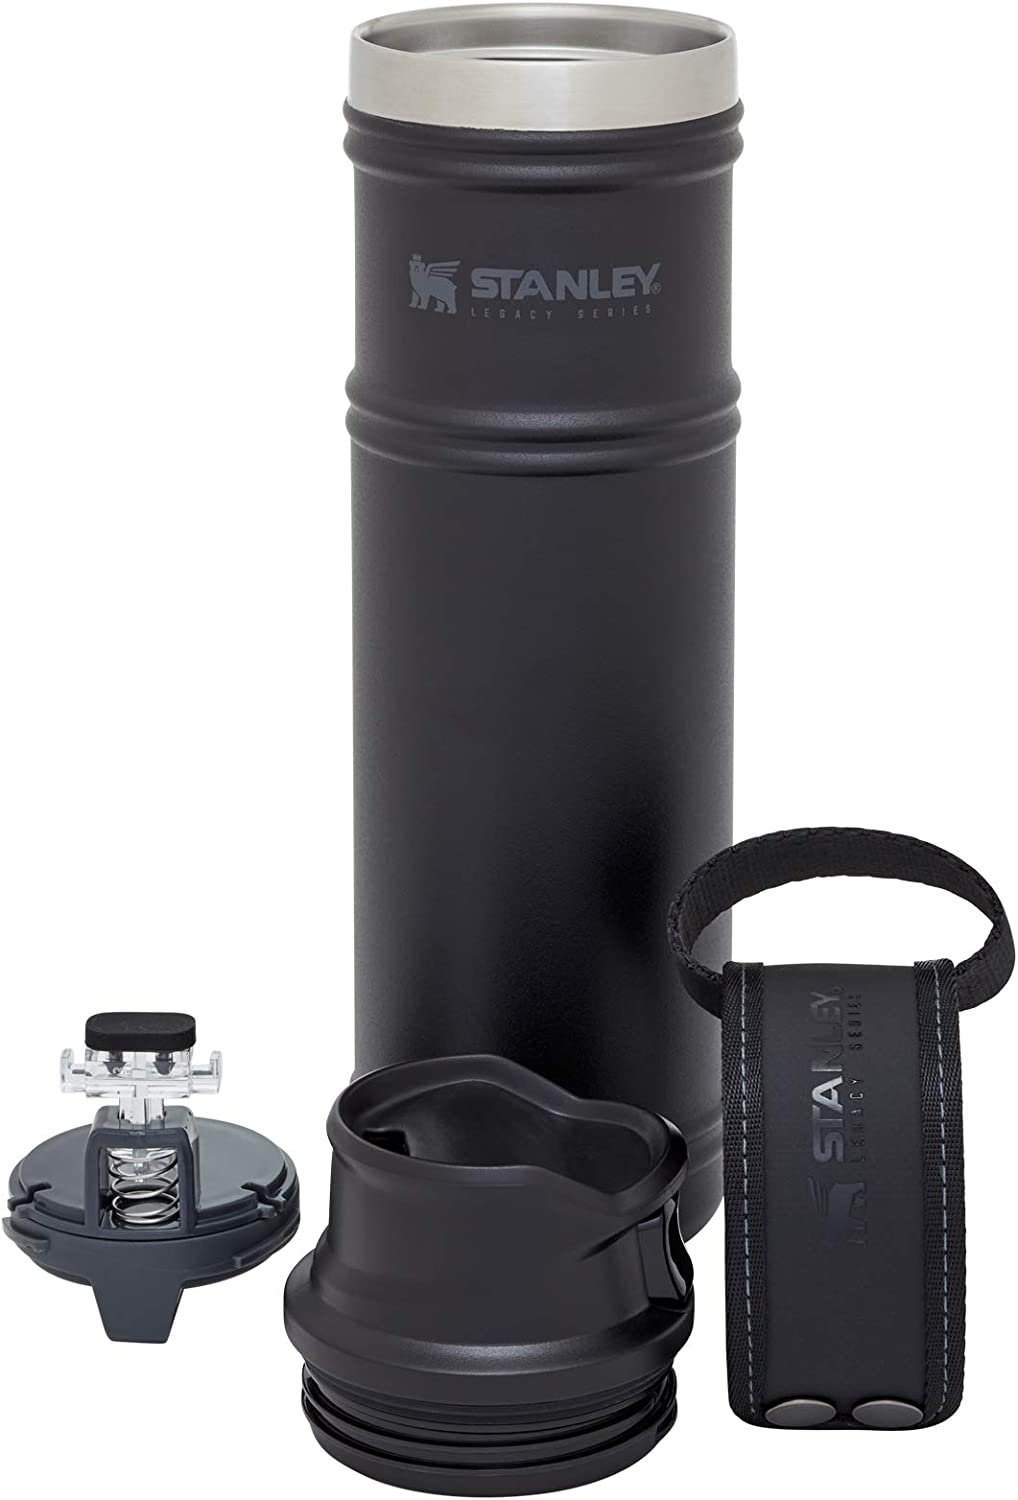 Stanley Adventure Vacuum Switchback Travel Mug Insulated Tumbler